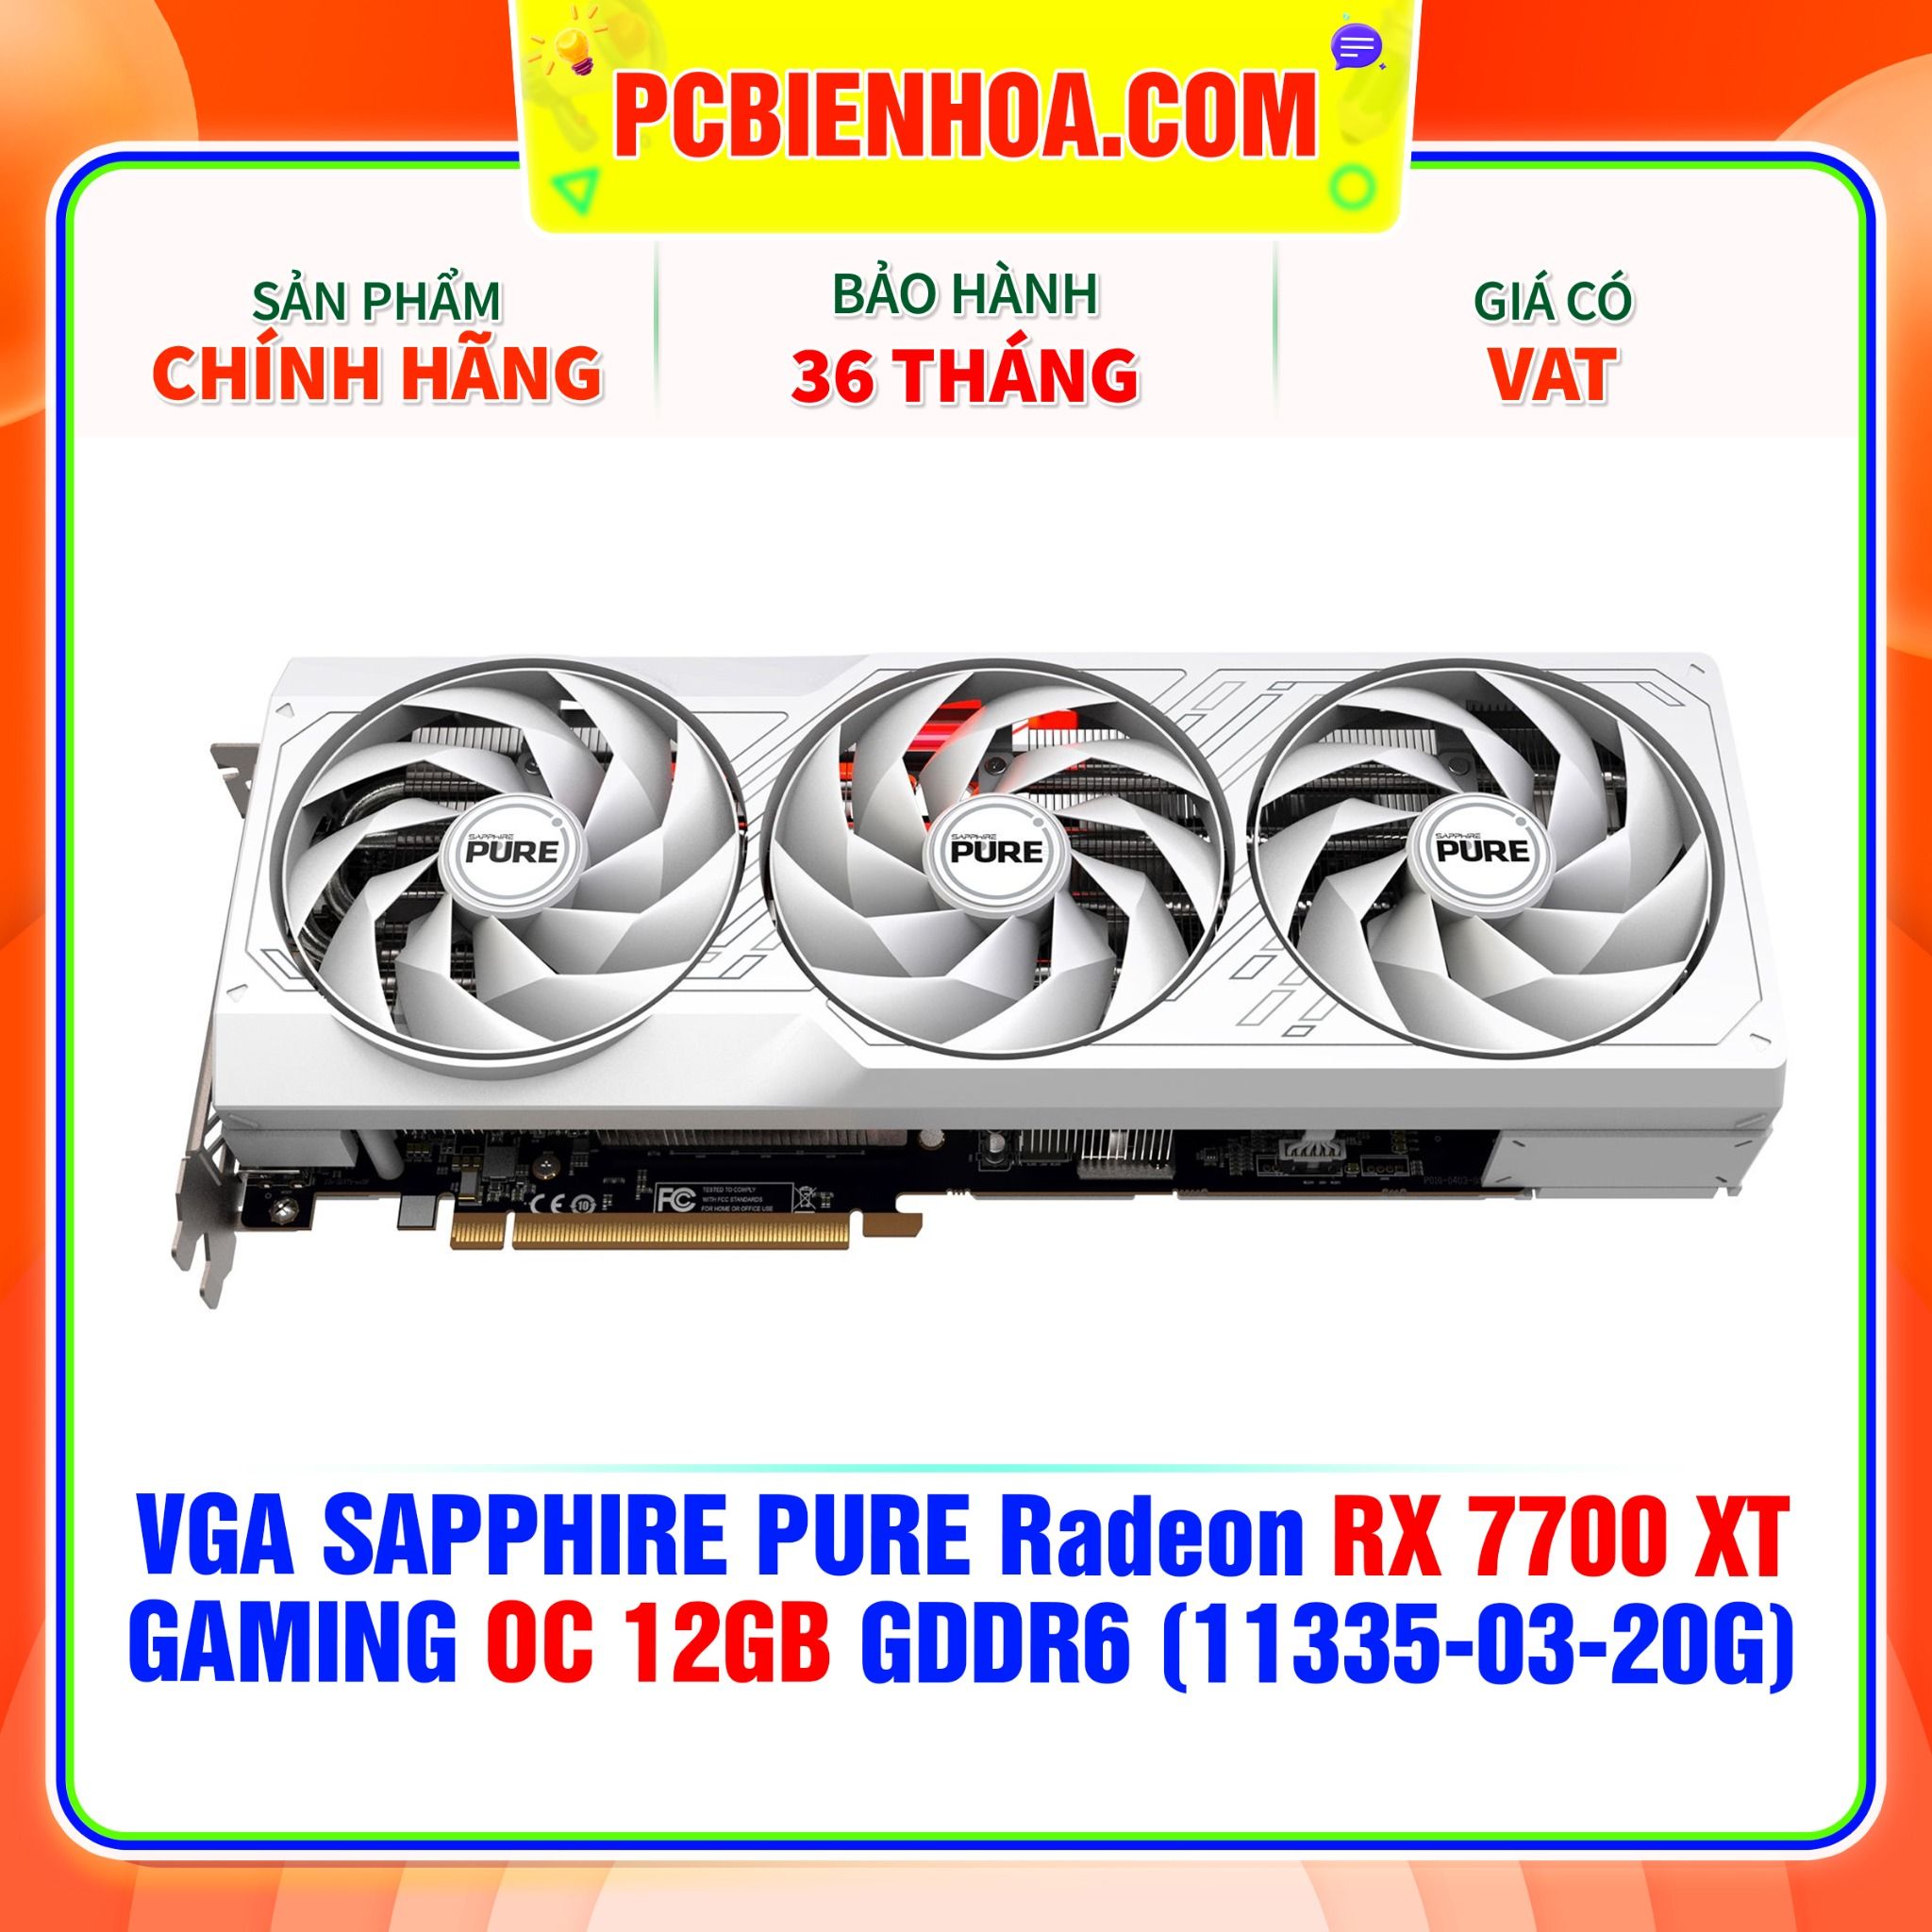  VGA SAPPHIRE PURE Radeon RX 7700 XT GAMING OC 12GB GDDR6 (11335-03-20G) 